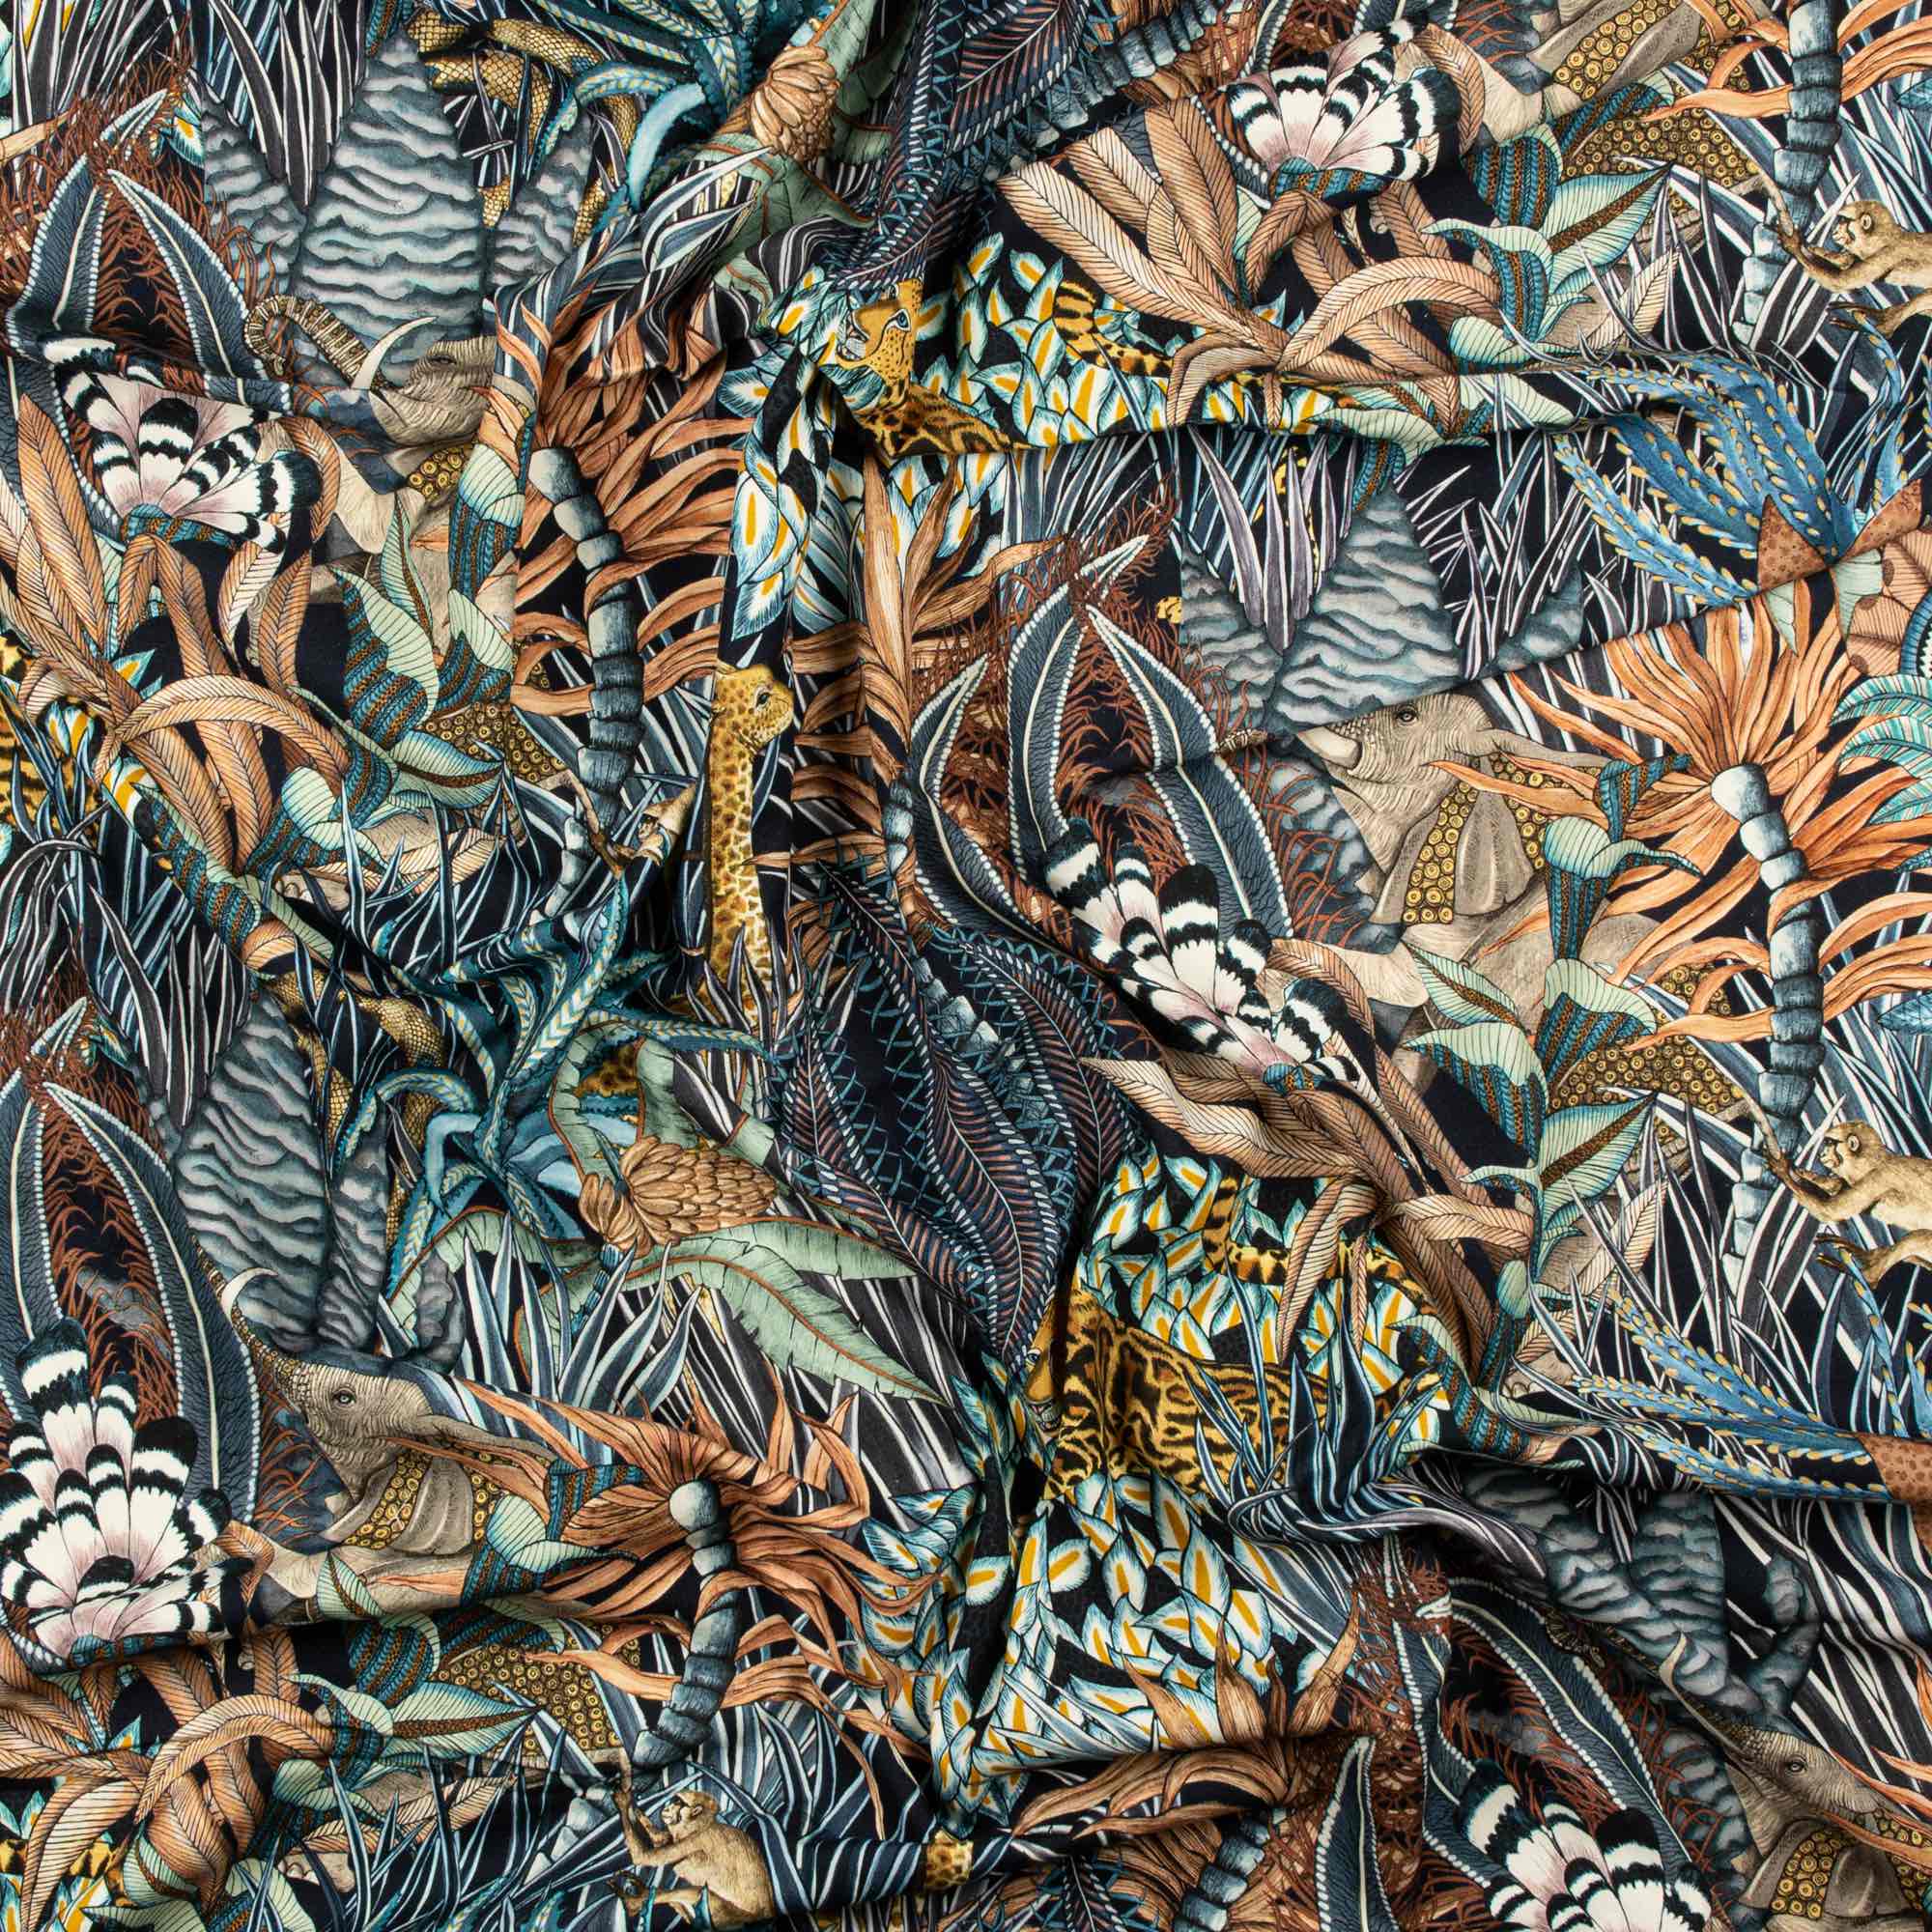 Sabie Forest Fabric - Velvet - Dawn